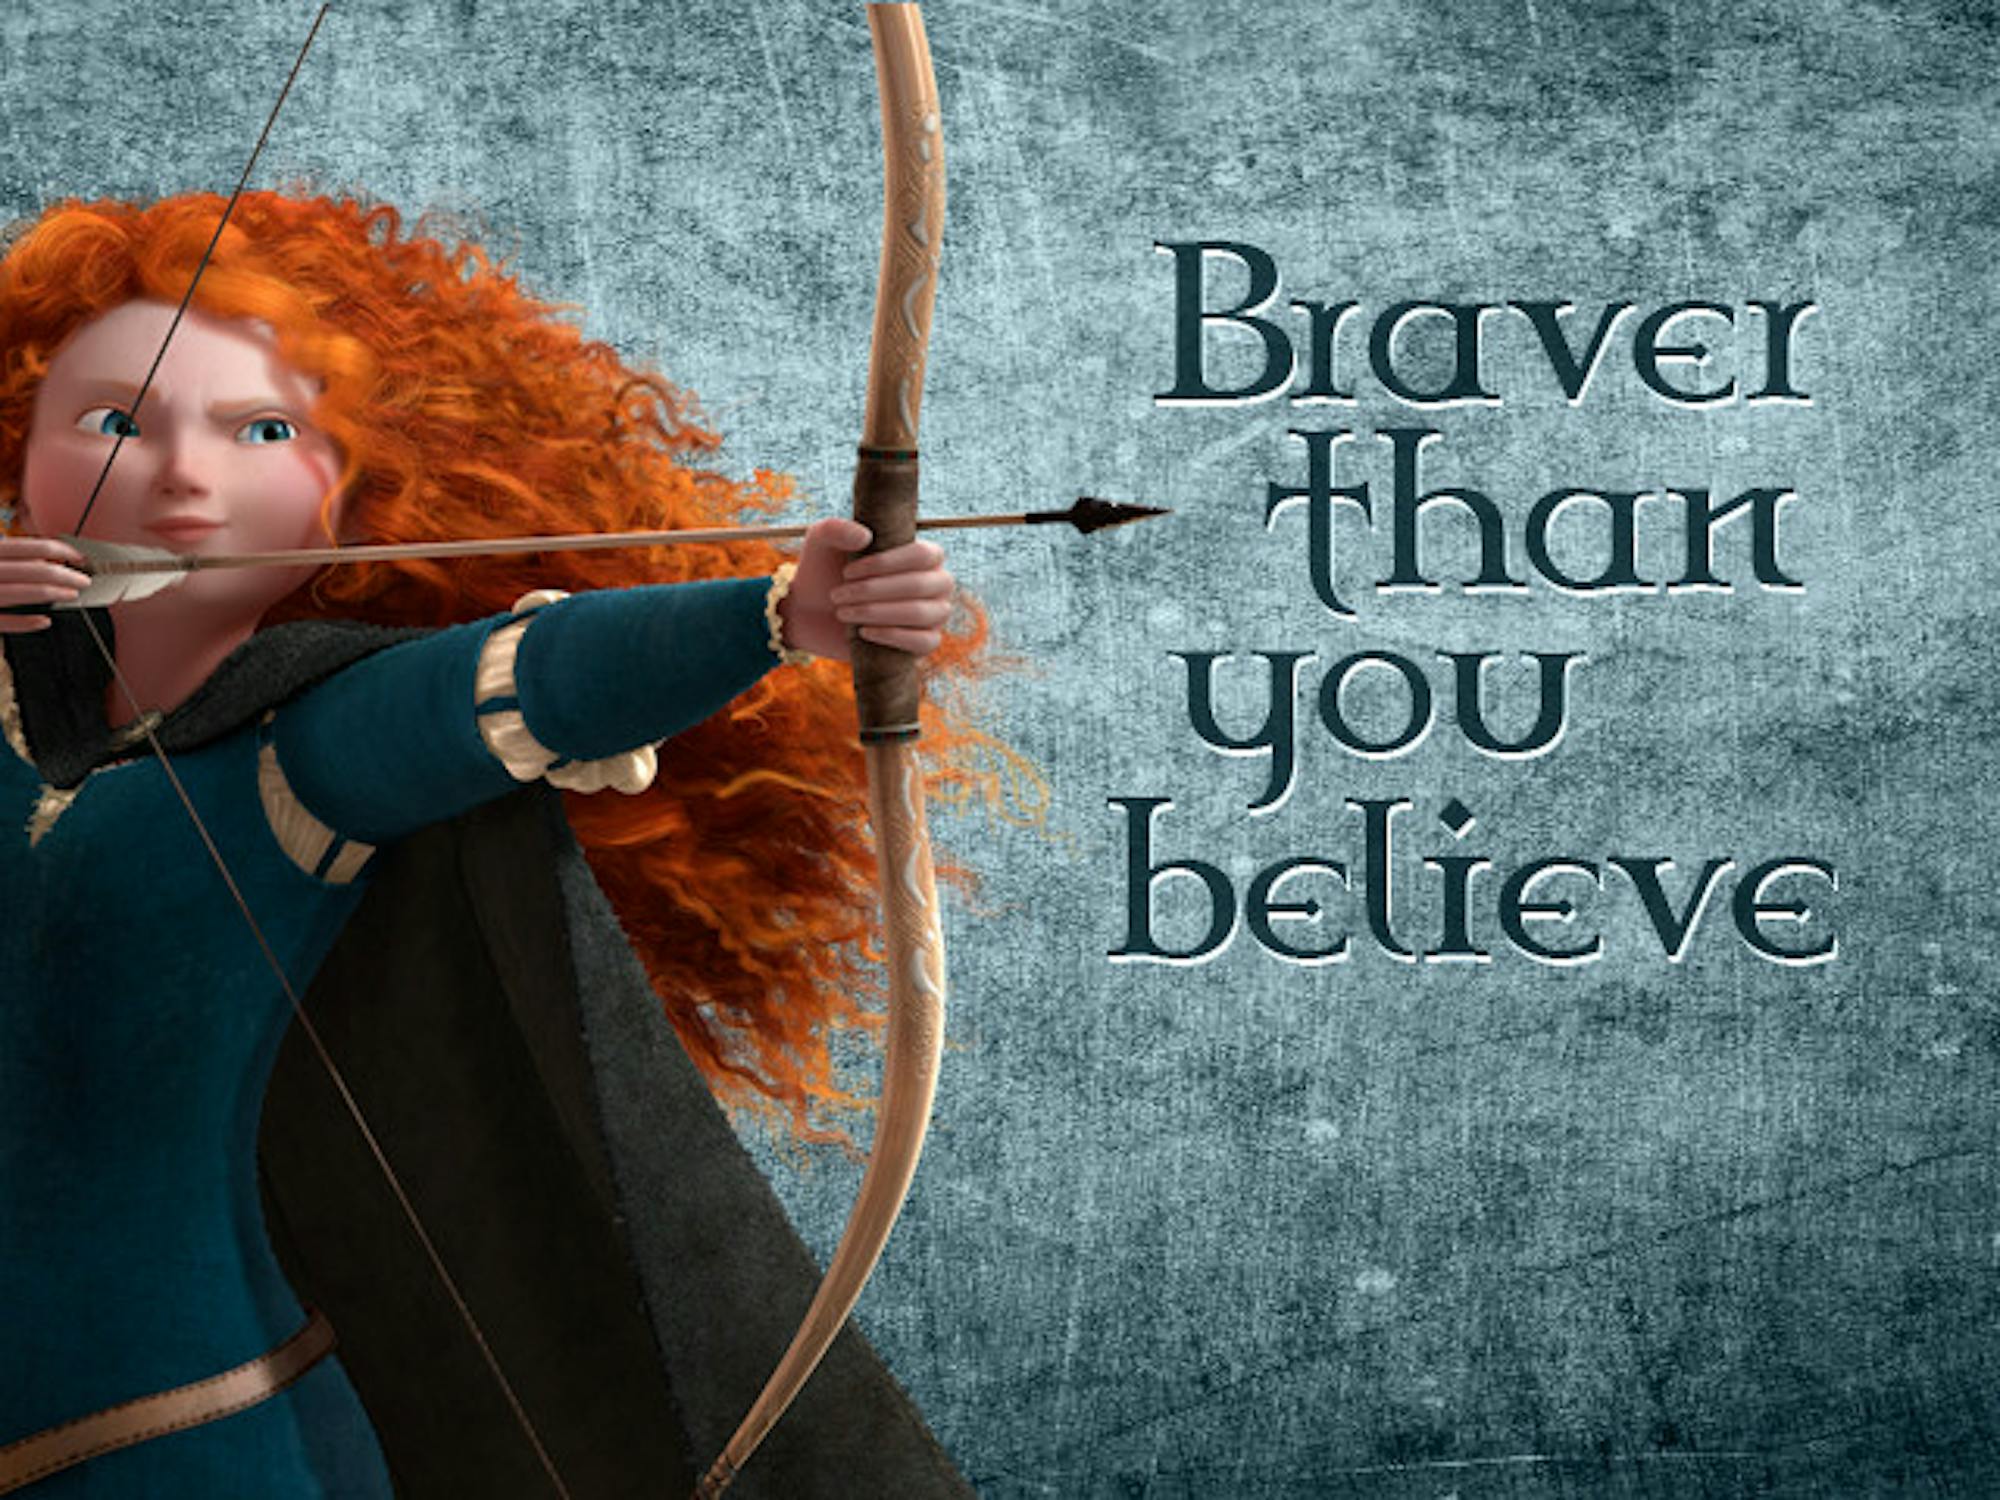 web_braver than you believe_9-25-2014